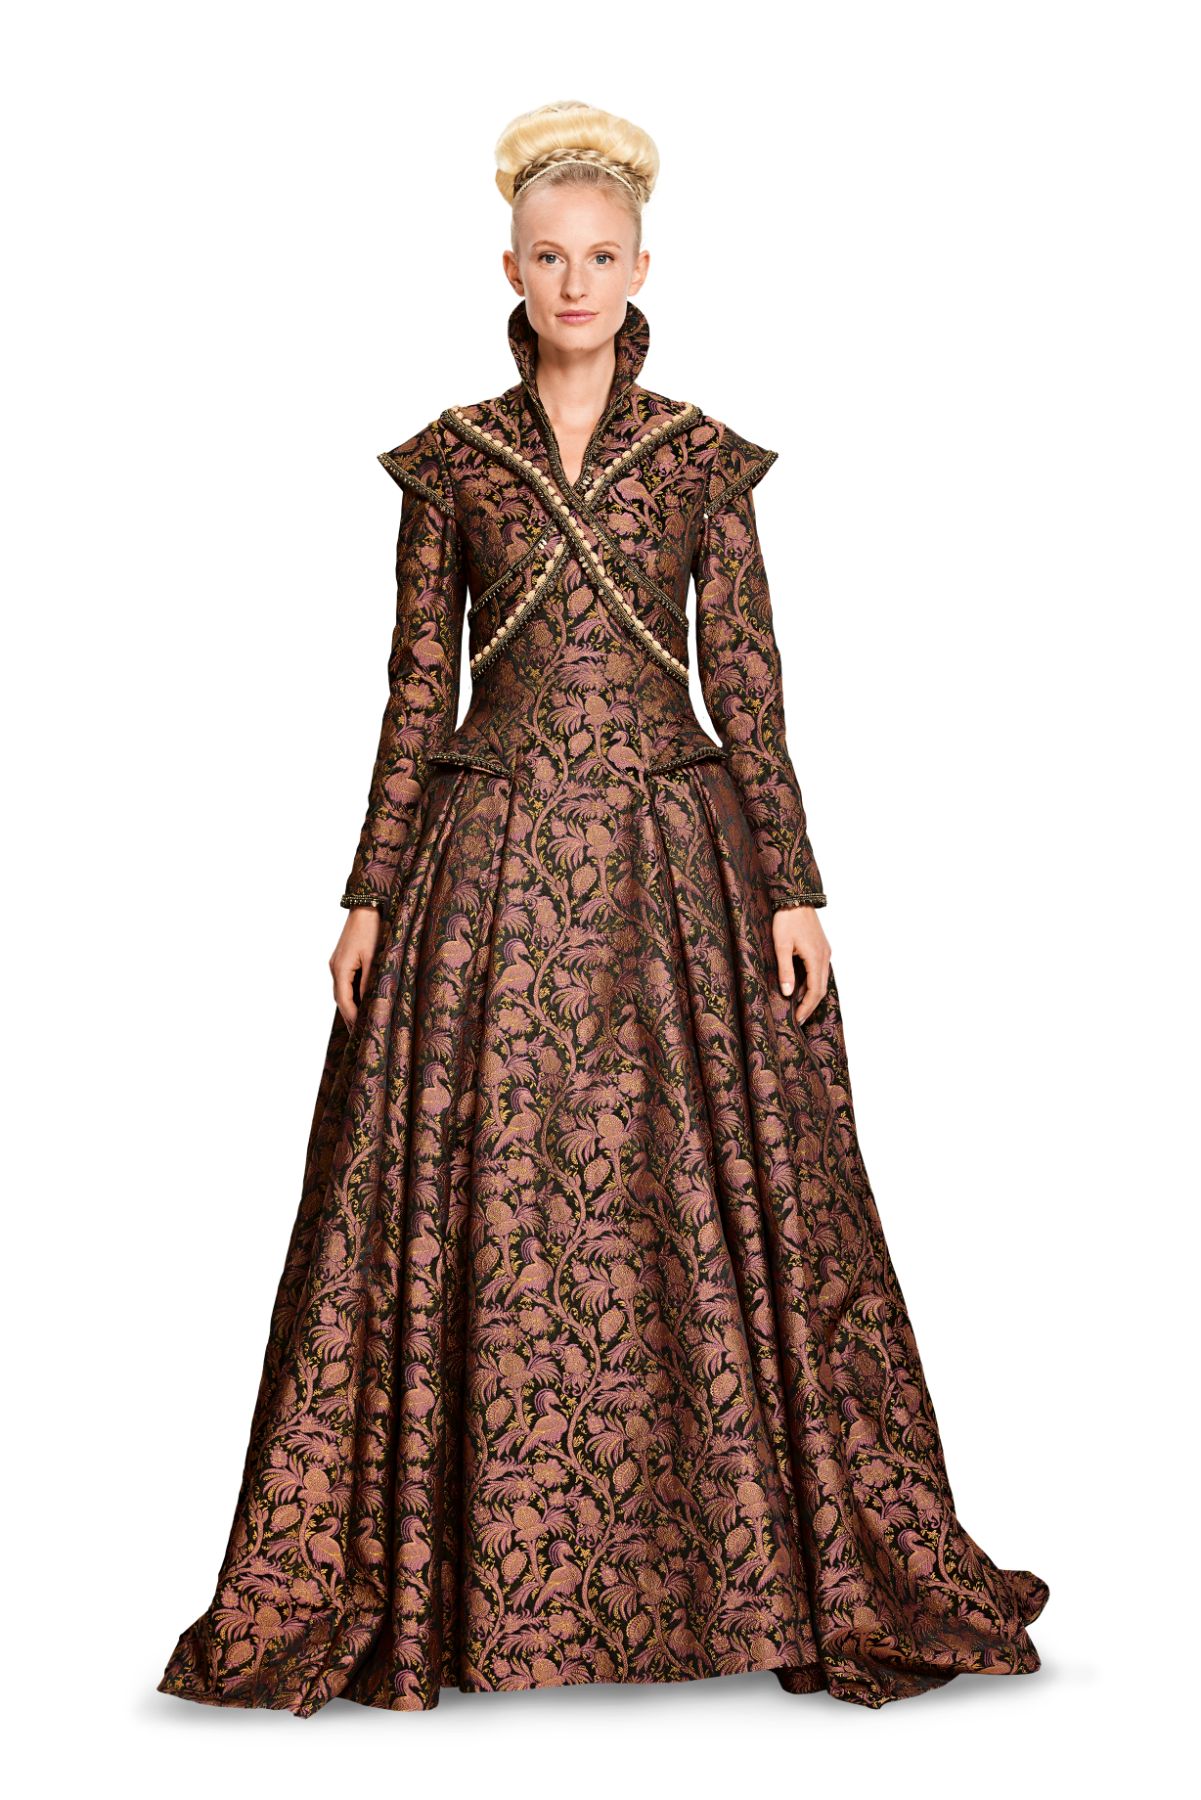 Burda Couture 6398 - Historisch Kostuum